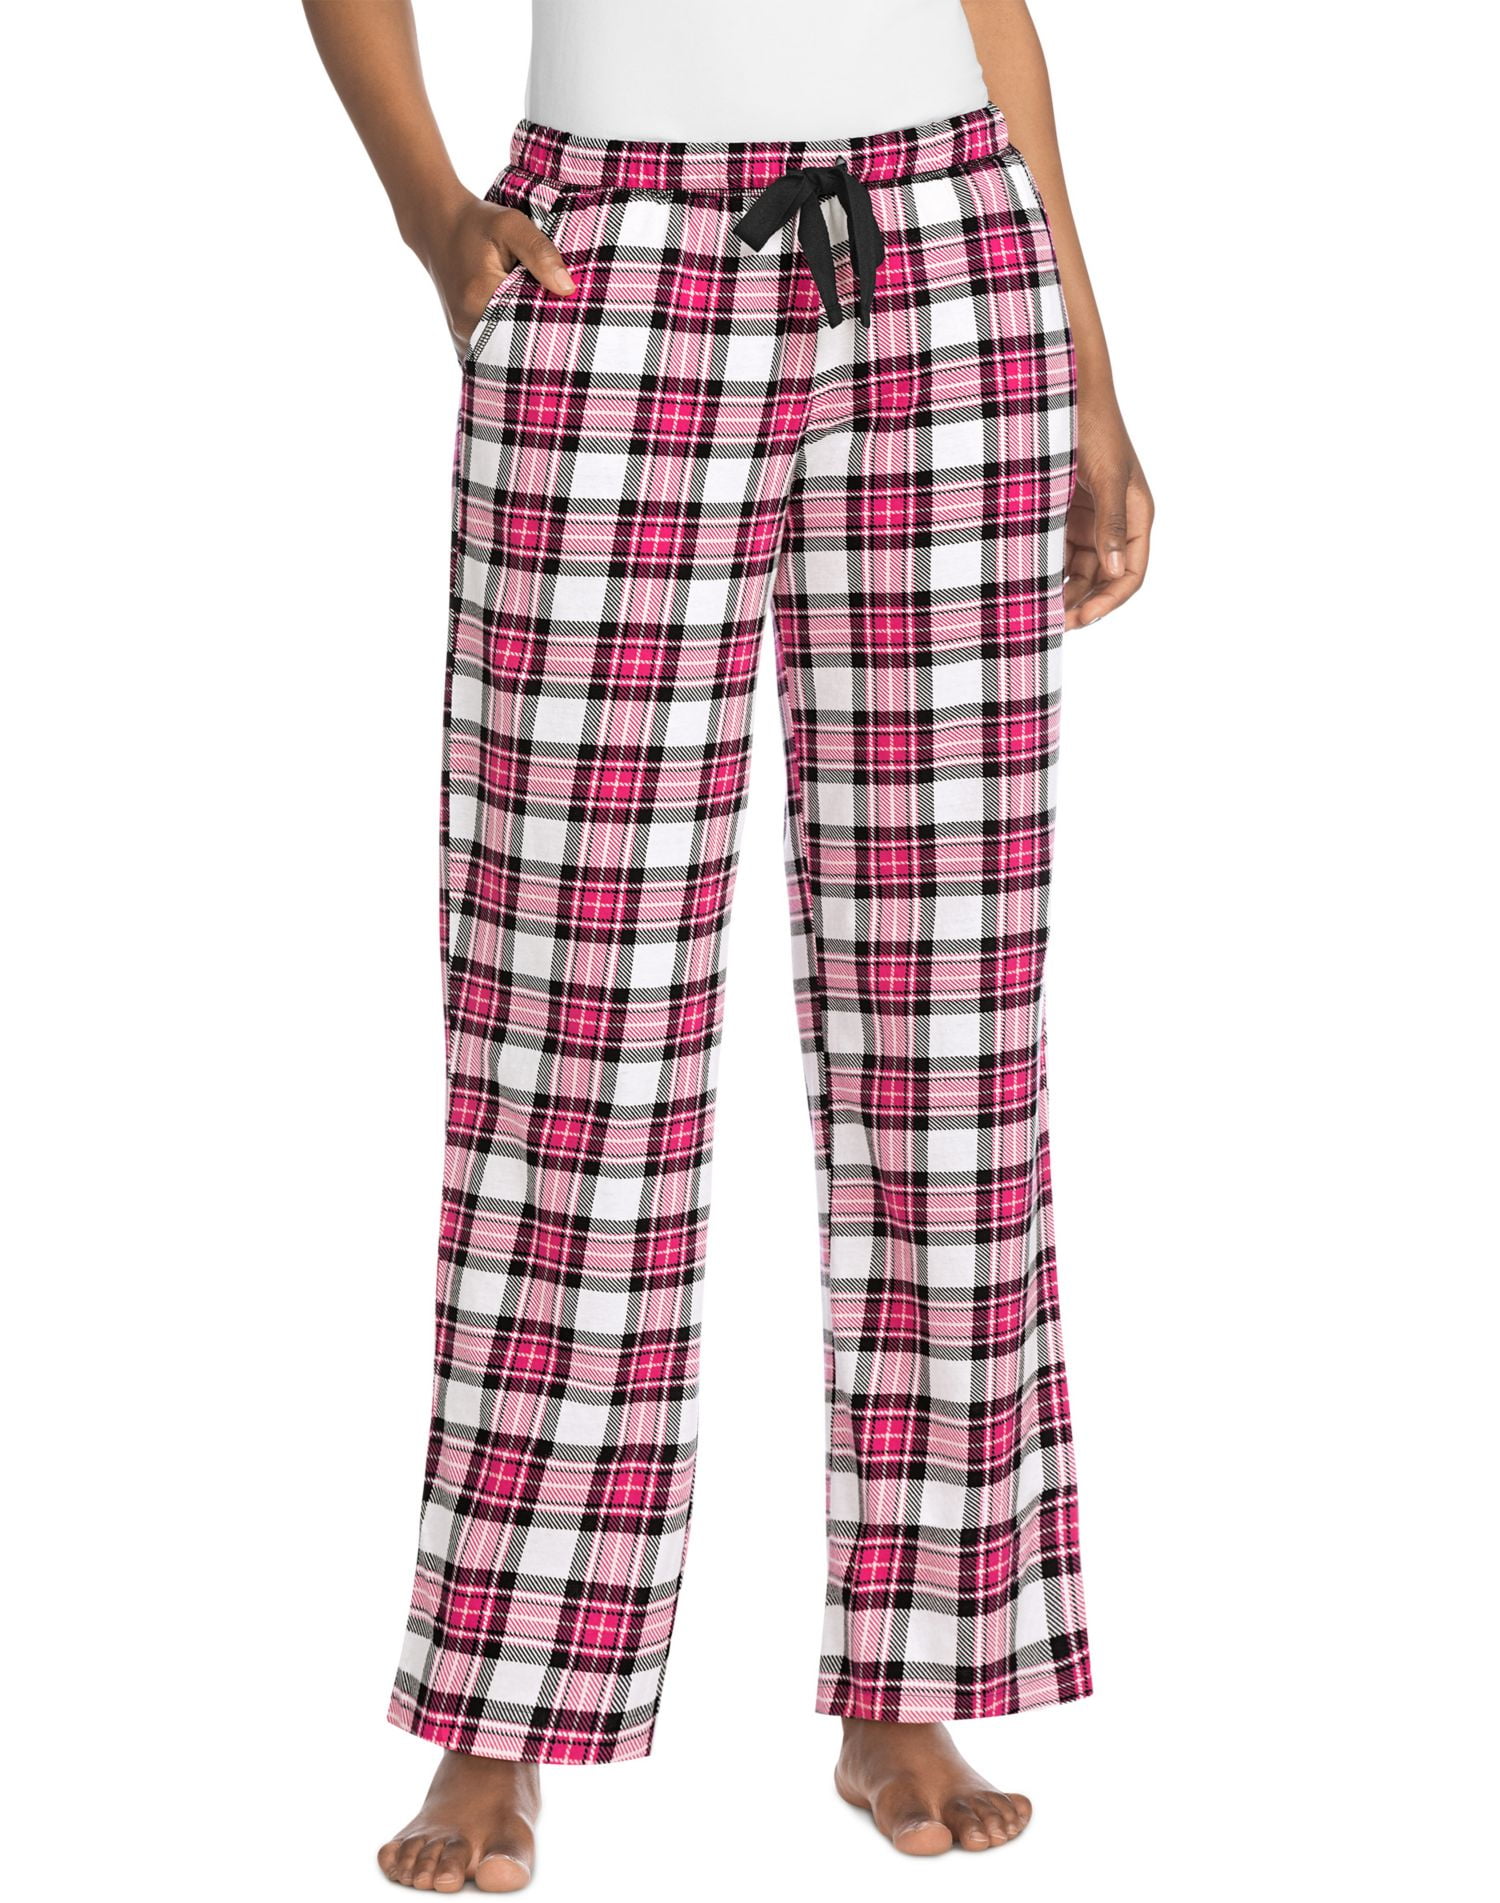 Hanes Womens Knit Lounge Pant, L, Bright Rose Plaid - Walmart.com